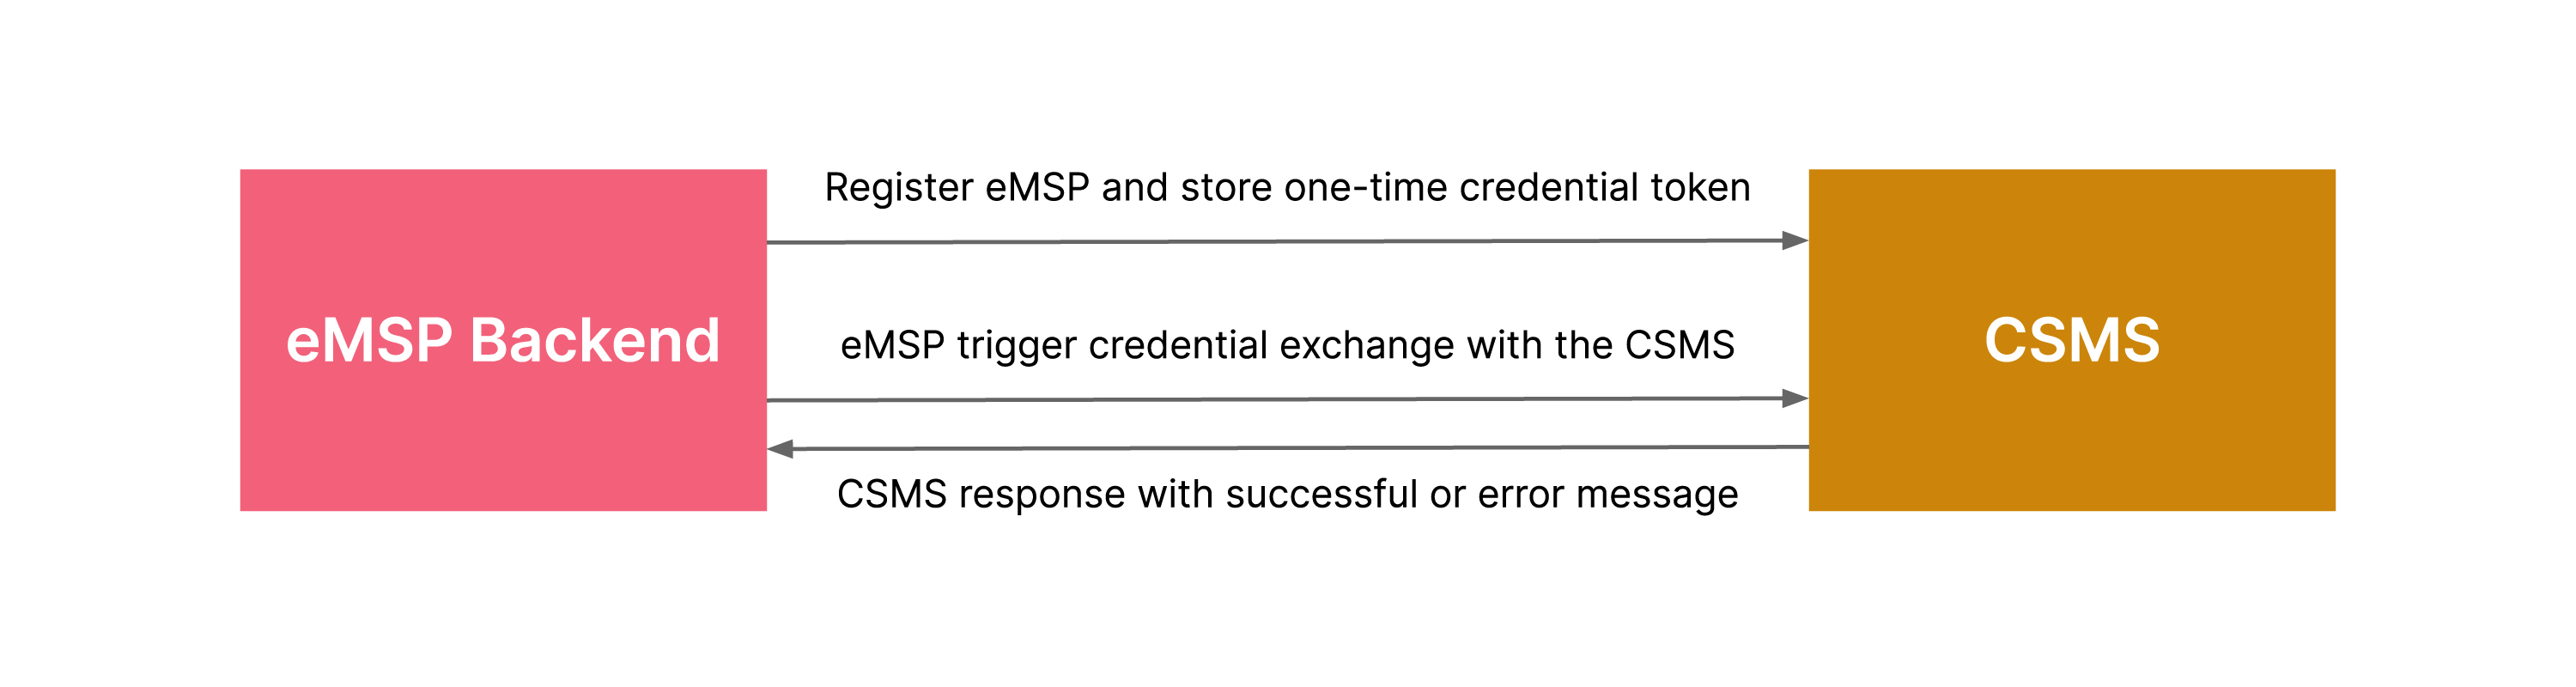 Credential exchange between eMSP backend and CSMS